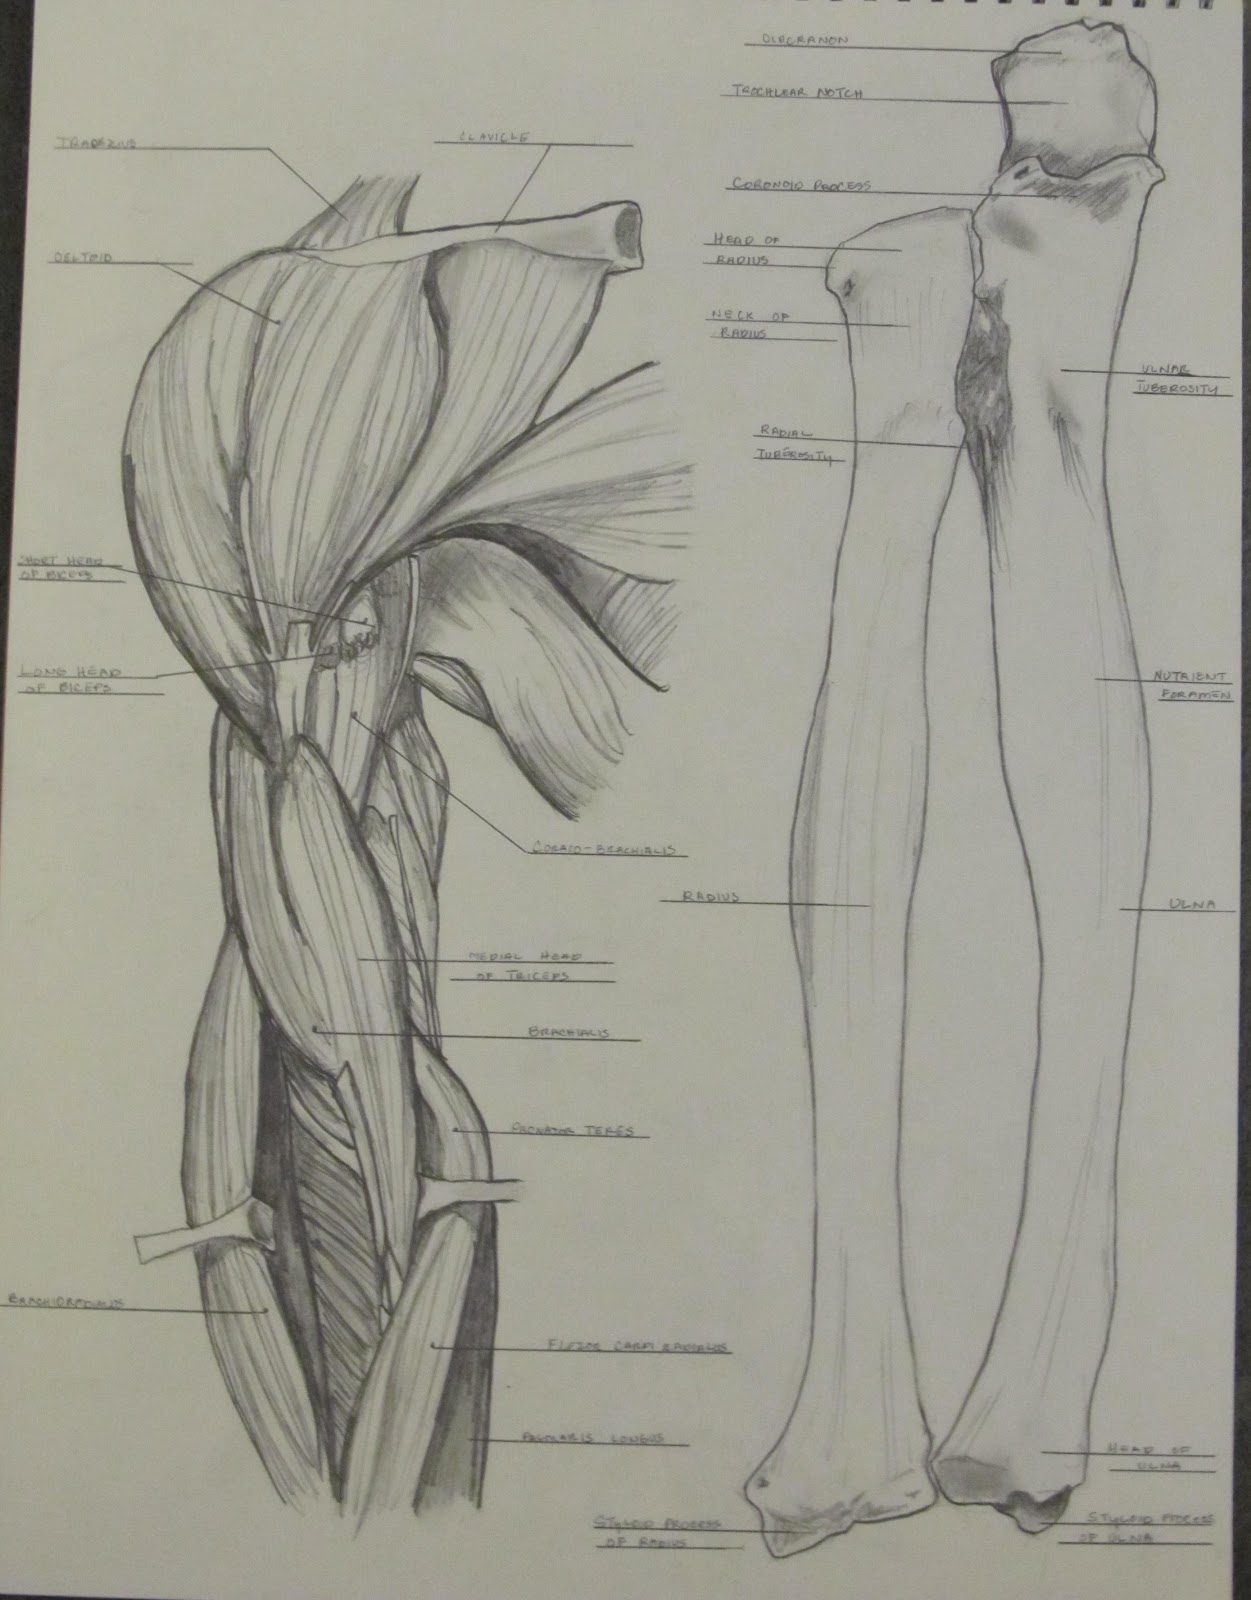 Art School Confidential: Summer Quarter 2012: Drawing & Anatomy: Bone